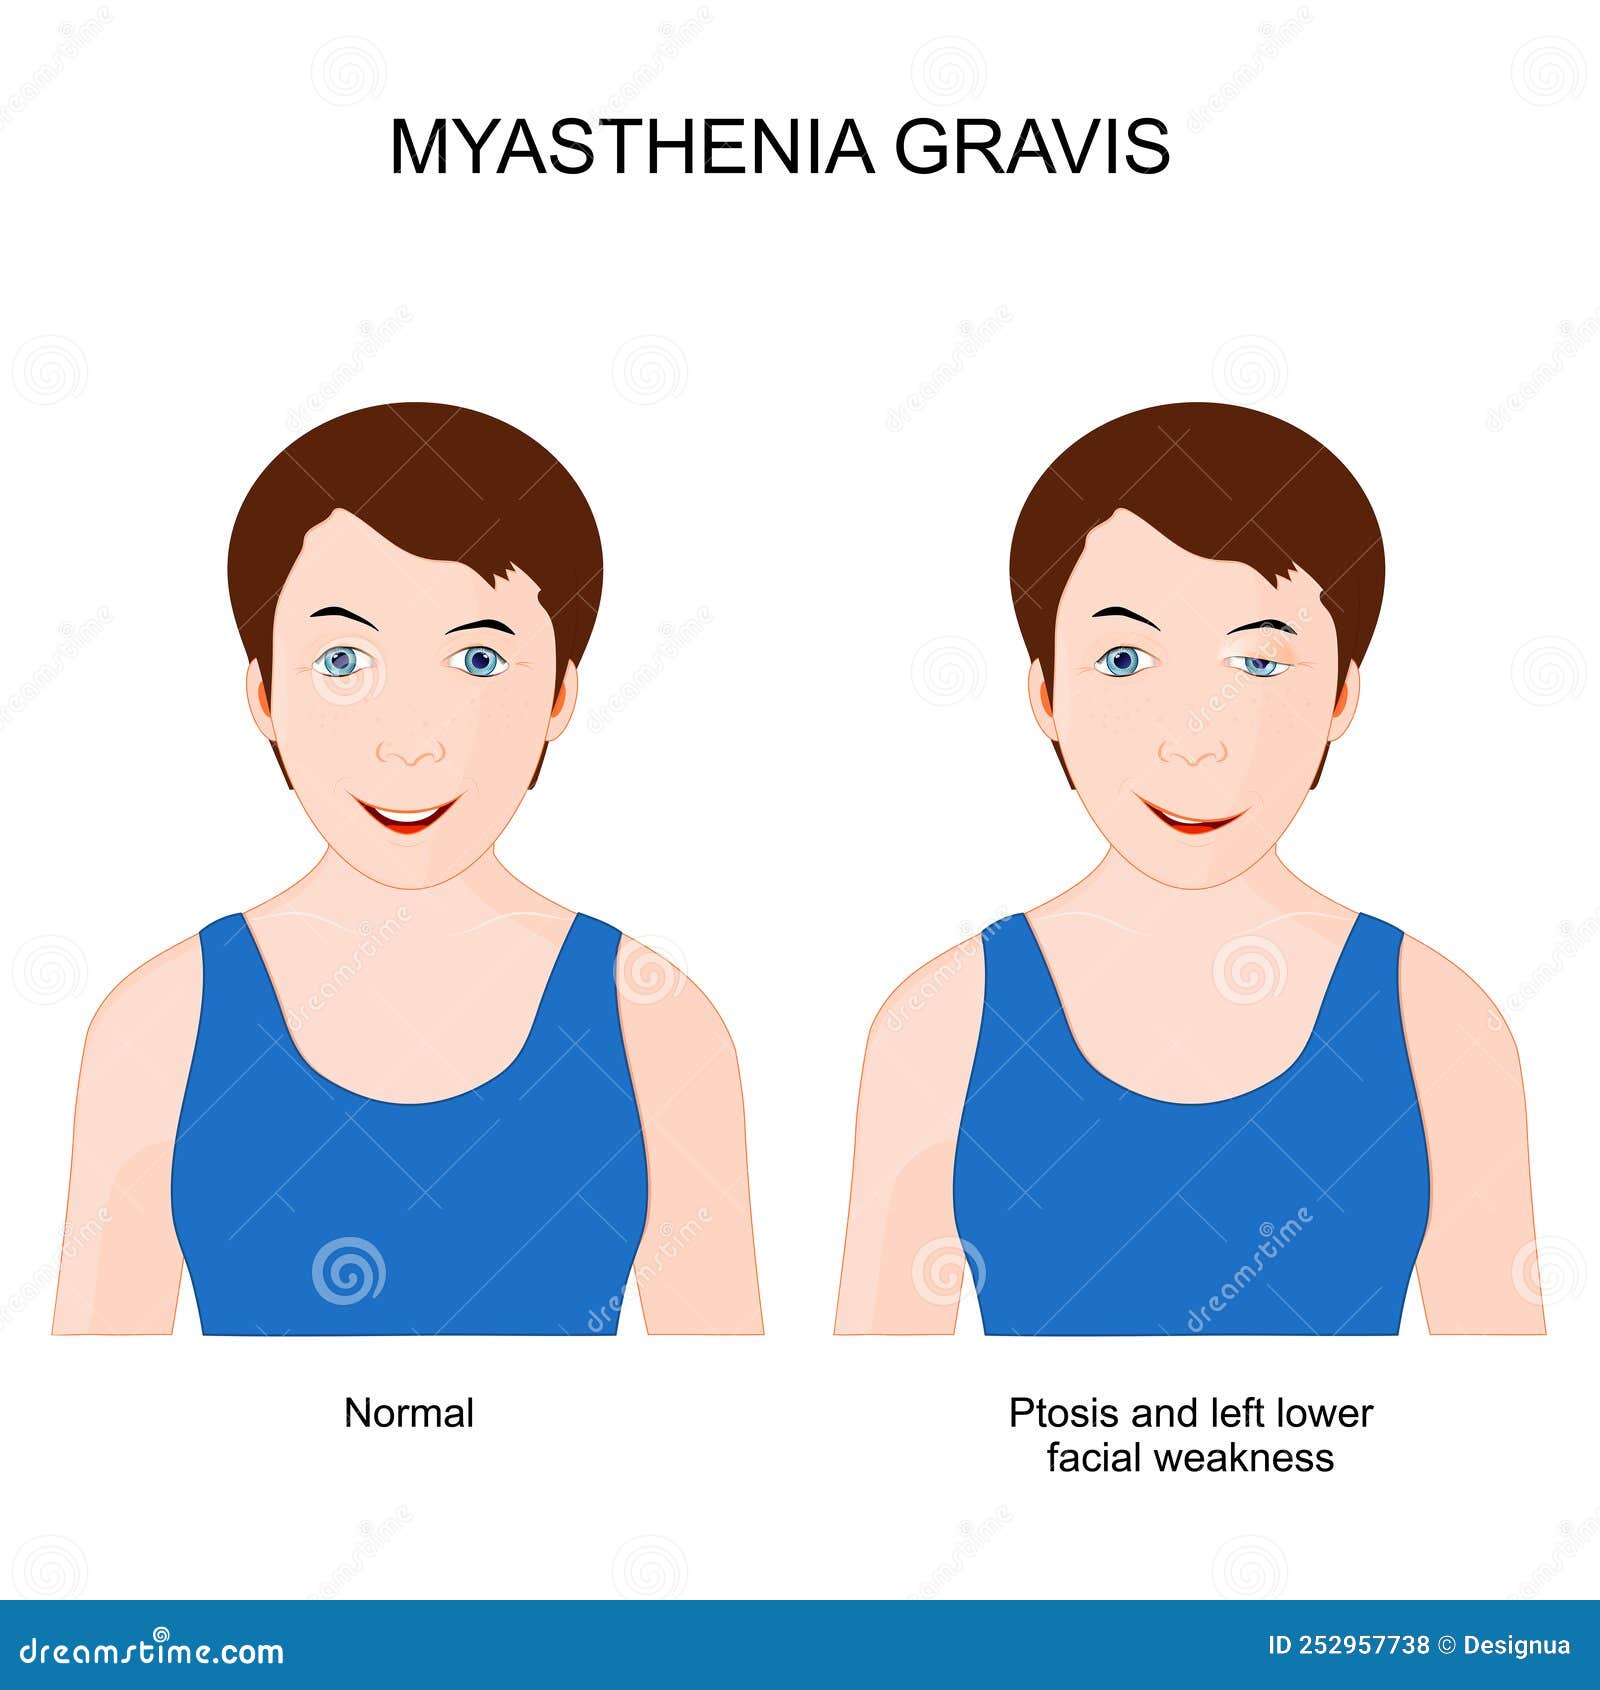 myasthenia gravis. girl with neuromuscular disease